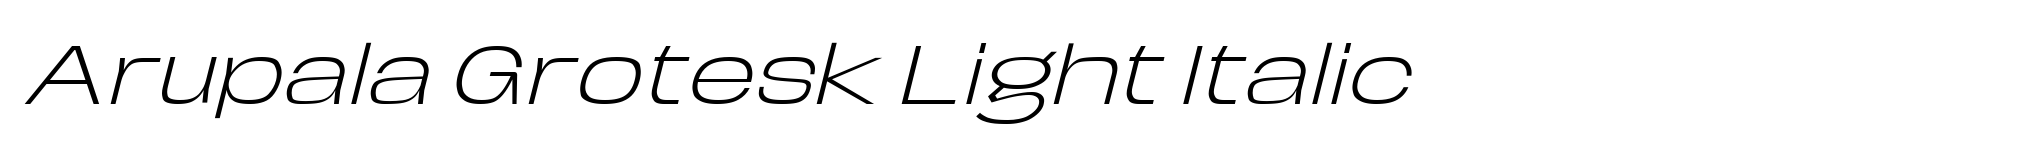 Arupala Grotesk Light Italic image